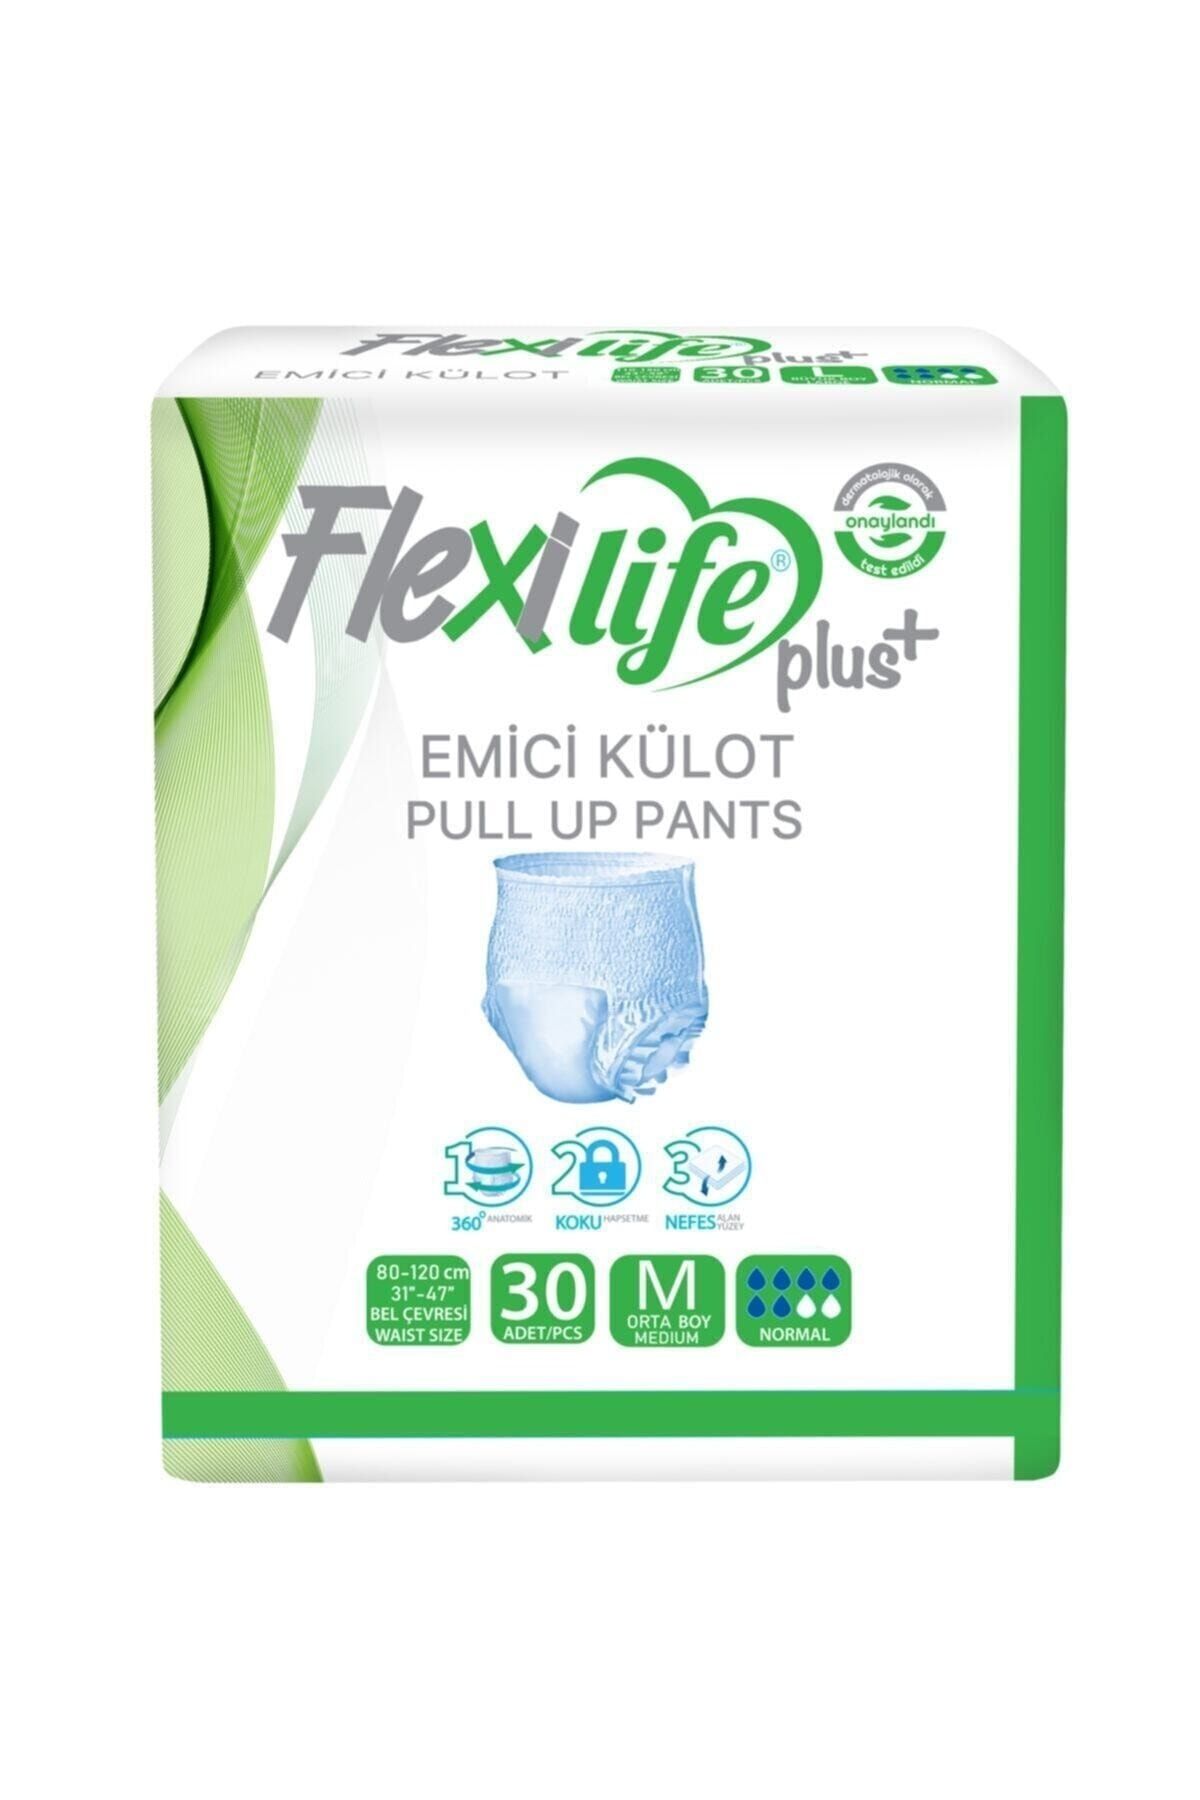 Flexi Life Flexilife Plus Ped Emici Külot Yetişkin Hasta Bezi Medium Boy 30 Kulanım